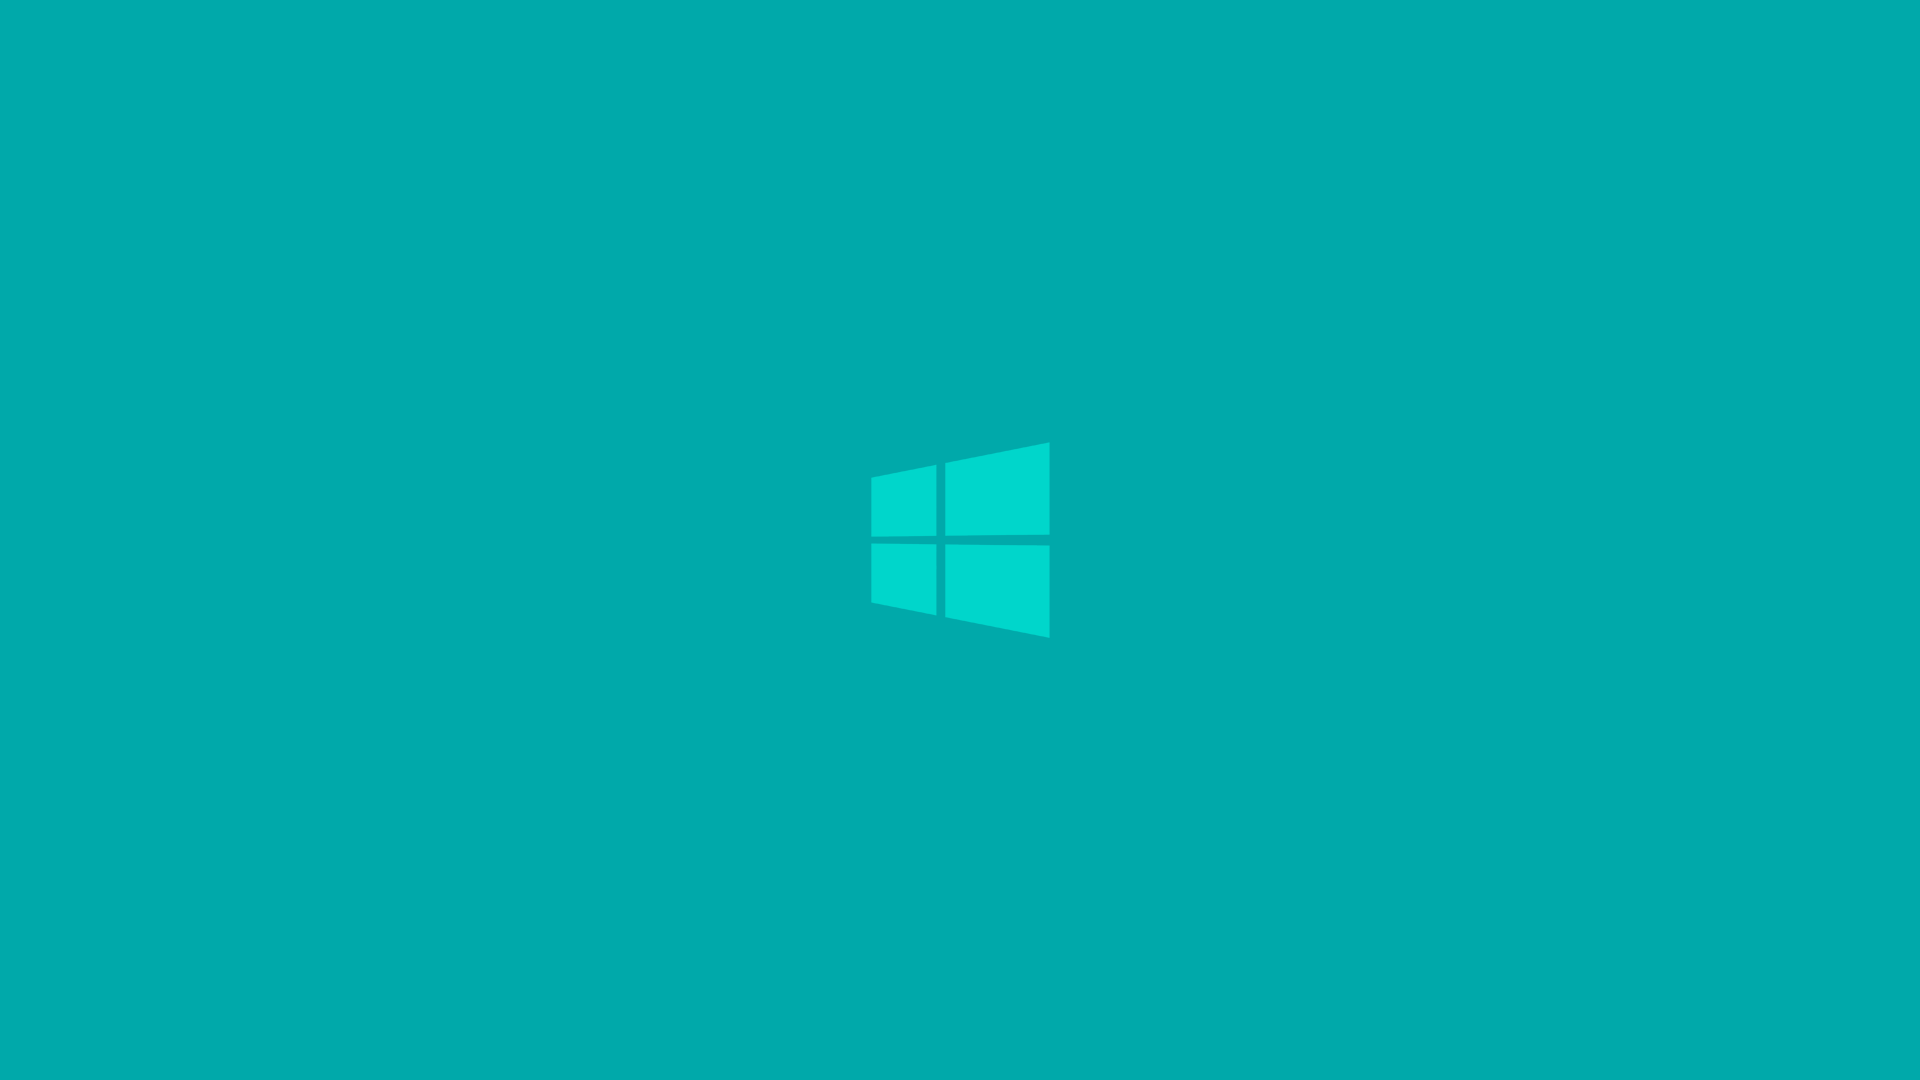 синий, минималистичный, метро, Windows 8, голубой, голубой, чистый, окна логотип - обои на рабочий стол